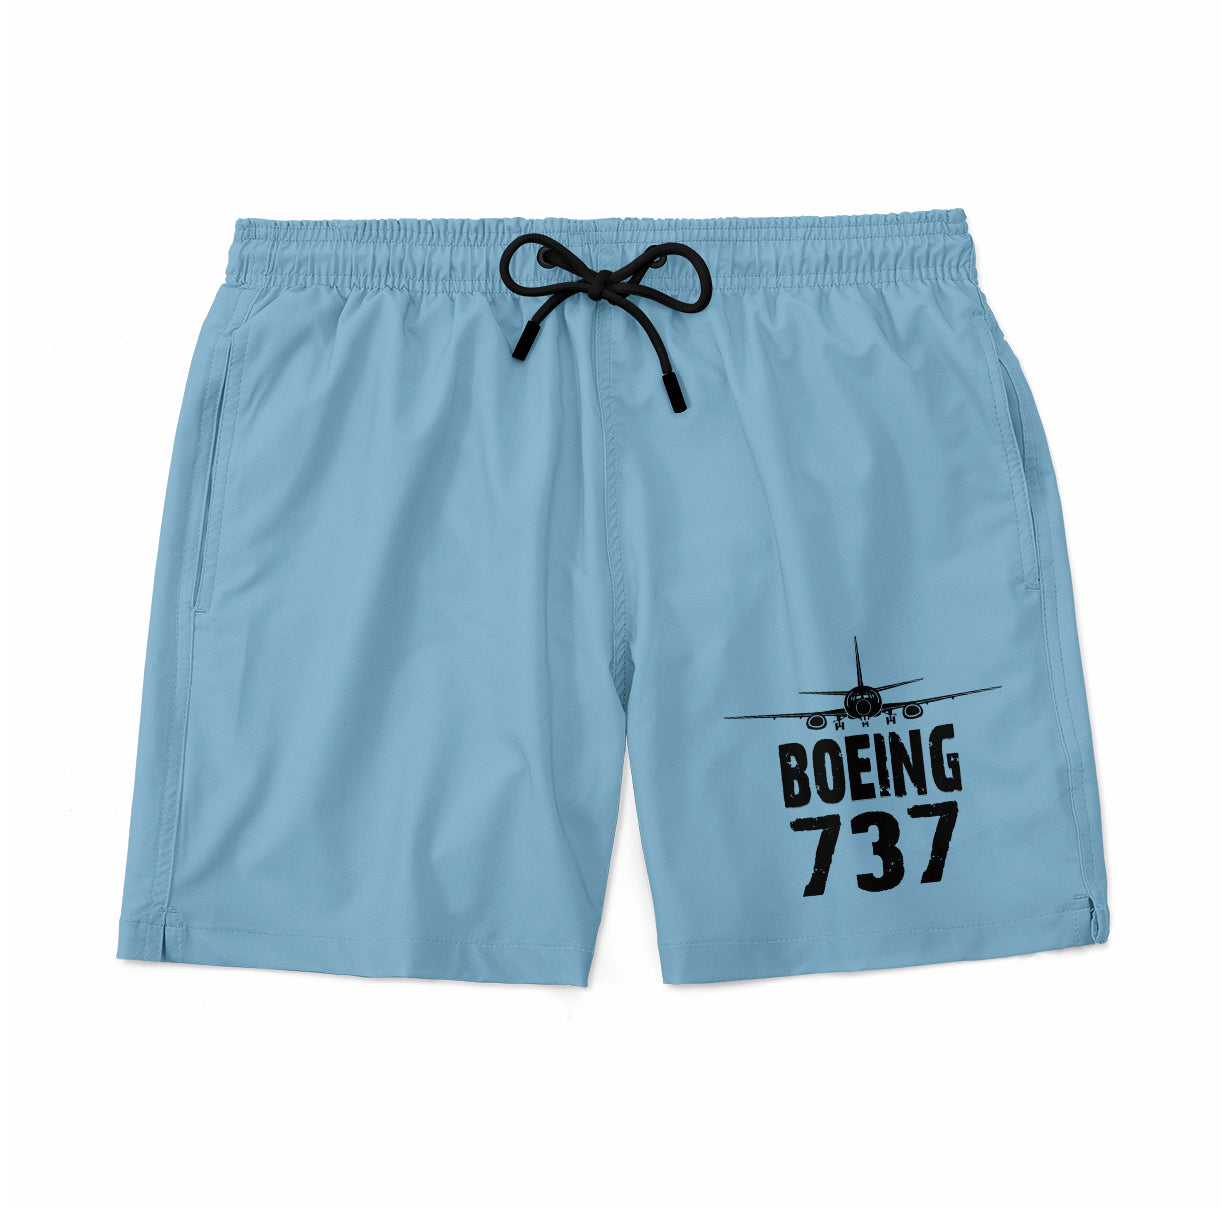 Boeing 737 & Plane Designed Swim Trunks & Shorts